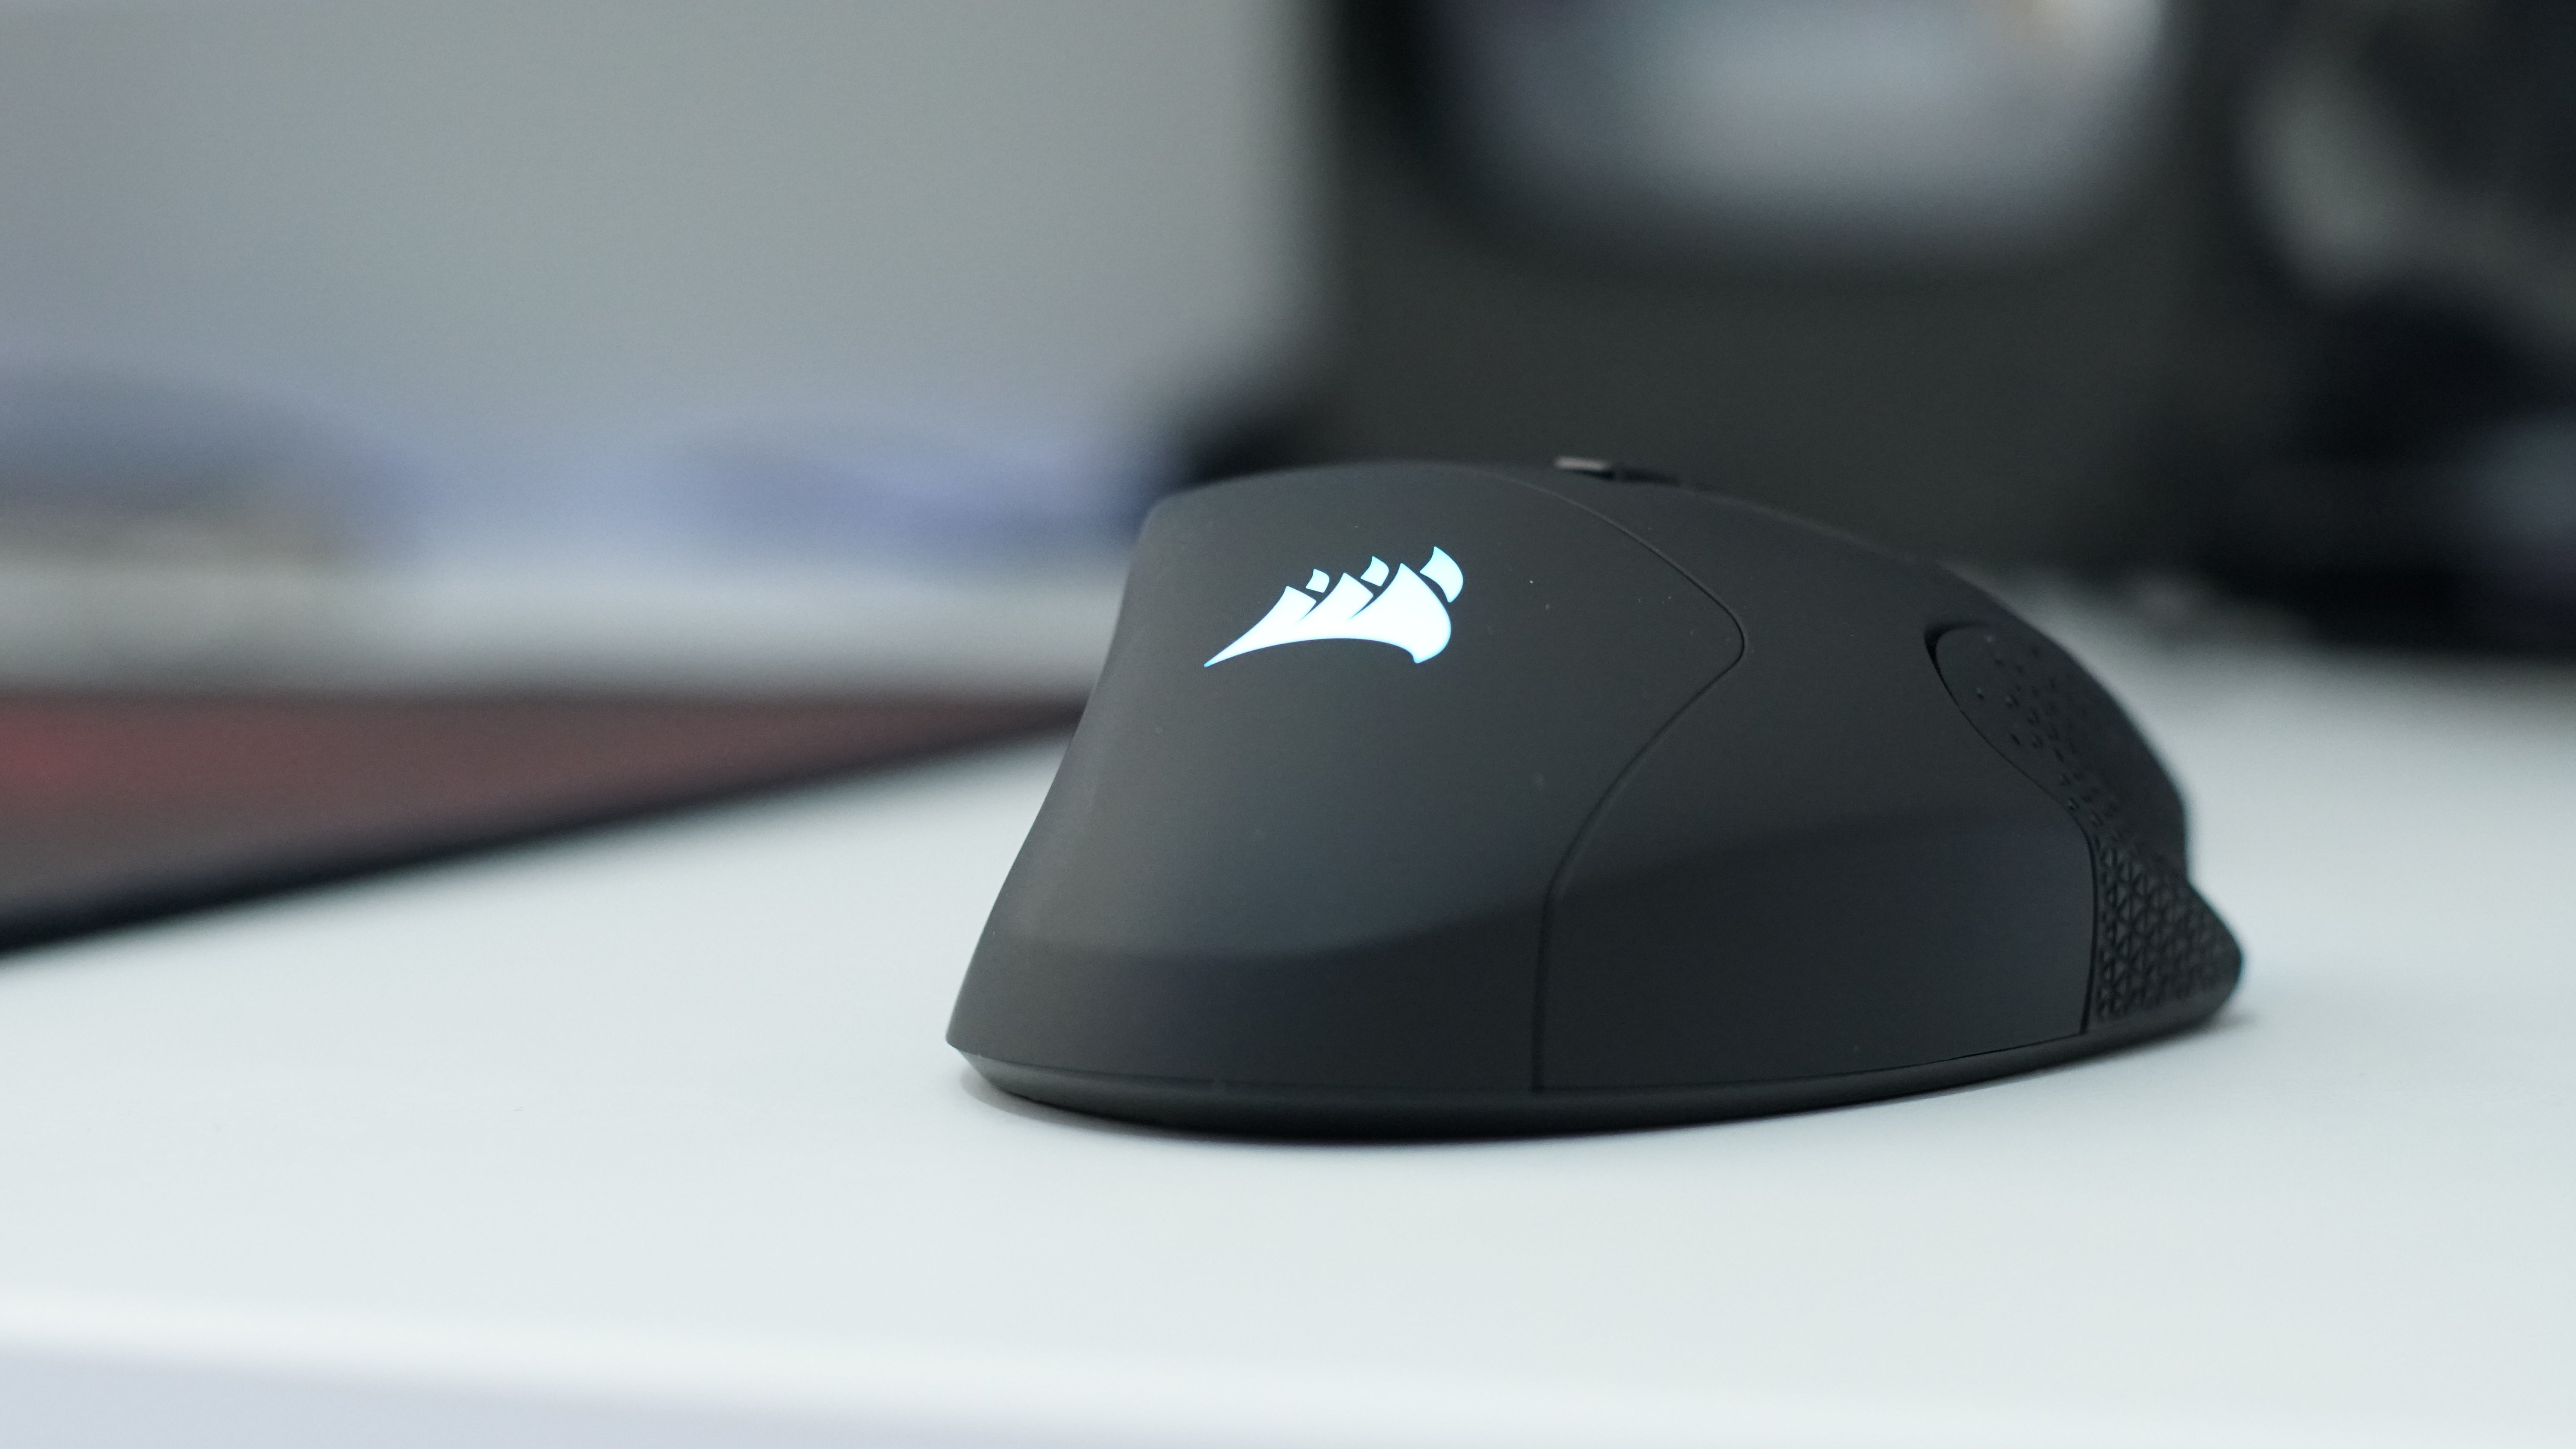 Corsair Scimitar Pro RGB gaming mouse on a desk